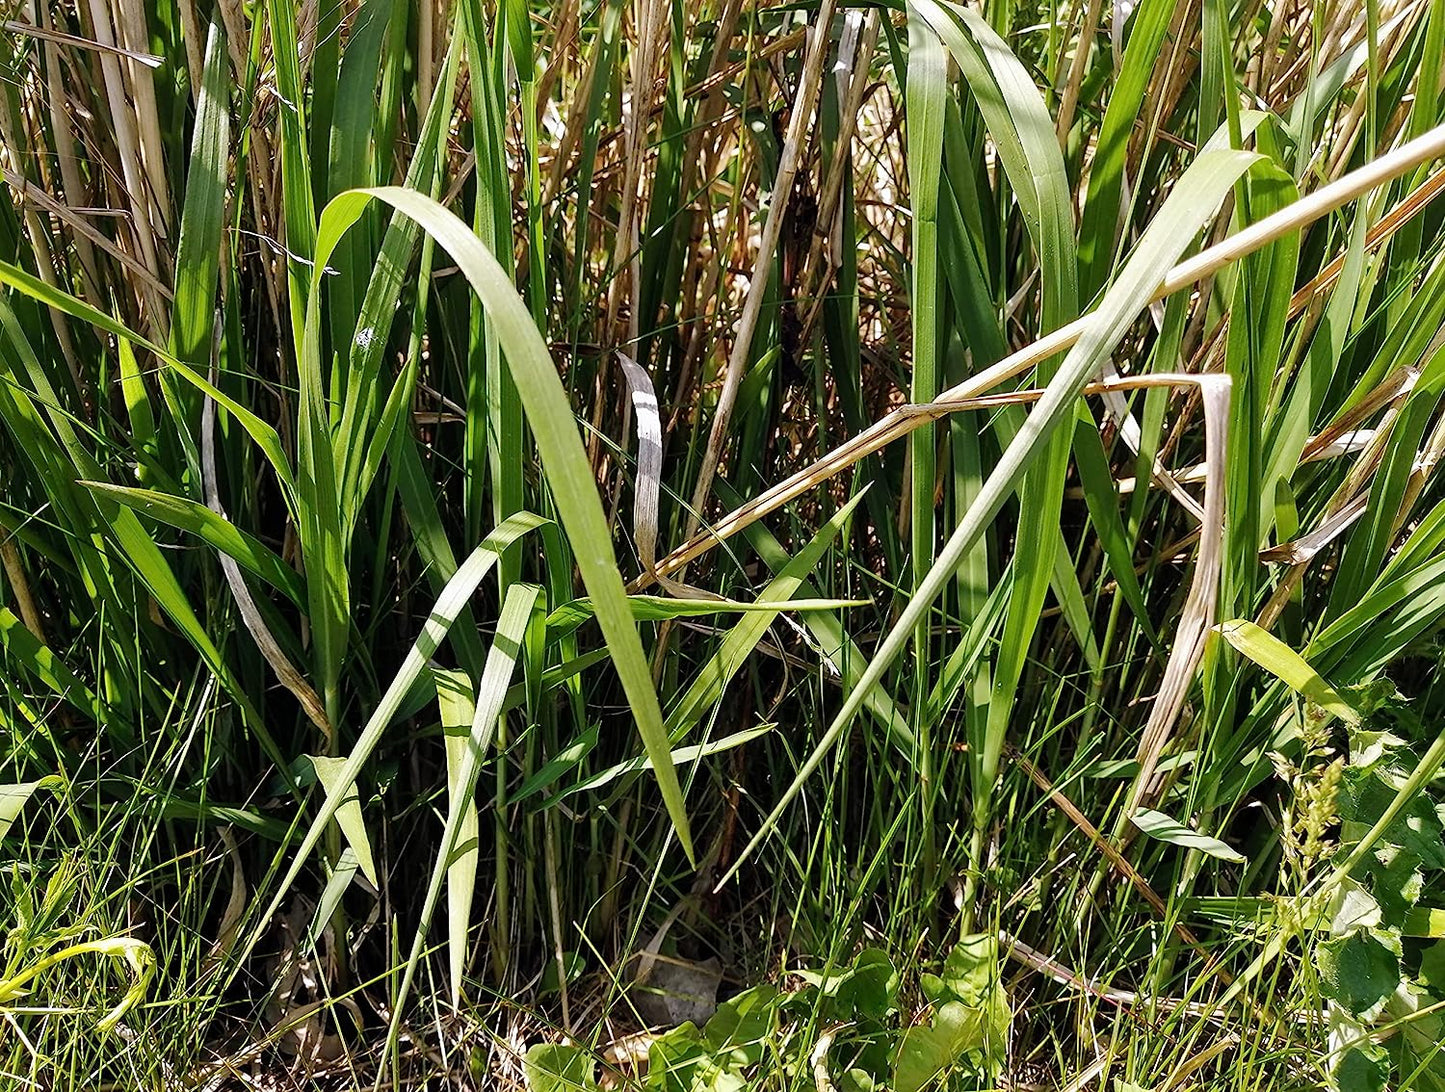 Hundredfold 1/2lb Switchgrass Switch Grass Seeds - Panicum virgatum Ornamental Bunch Grasses, Attract Birds, Valued for Native Garden & Wildflower Meadow